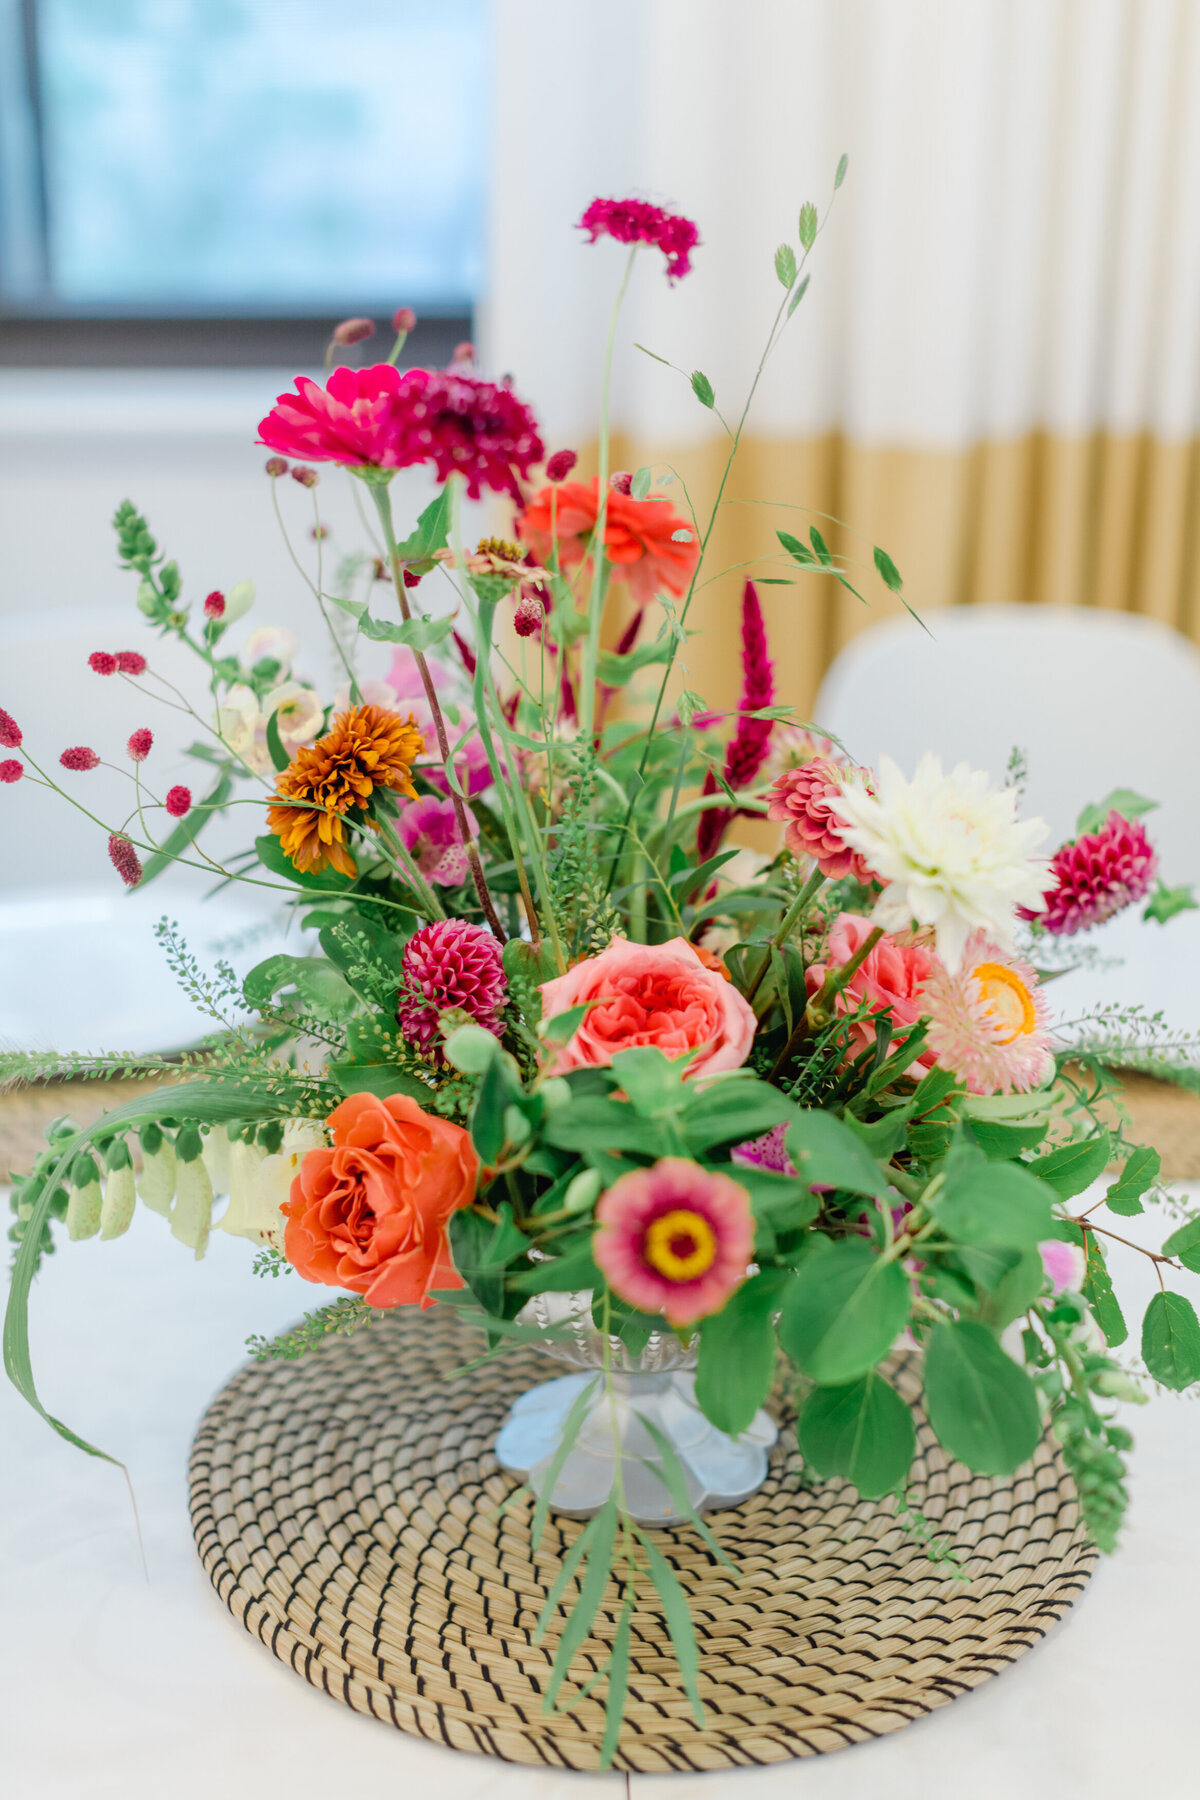 Atelier-Carmel-Wedding-Florist-GALLERY-Arrangements-16